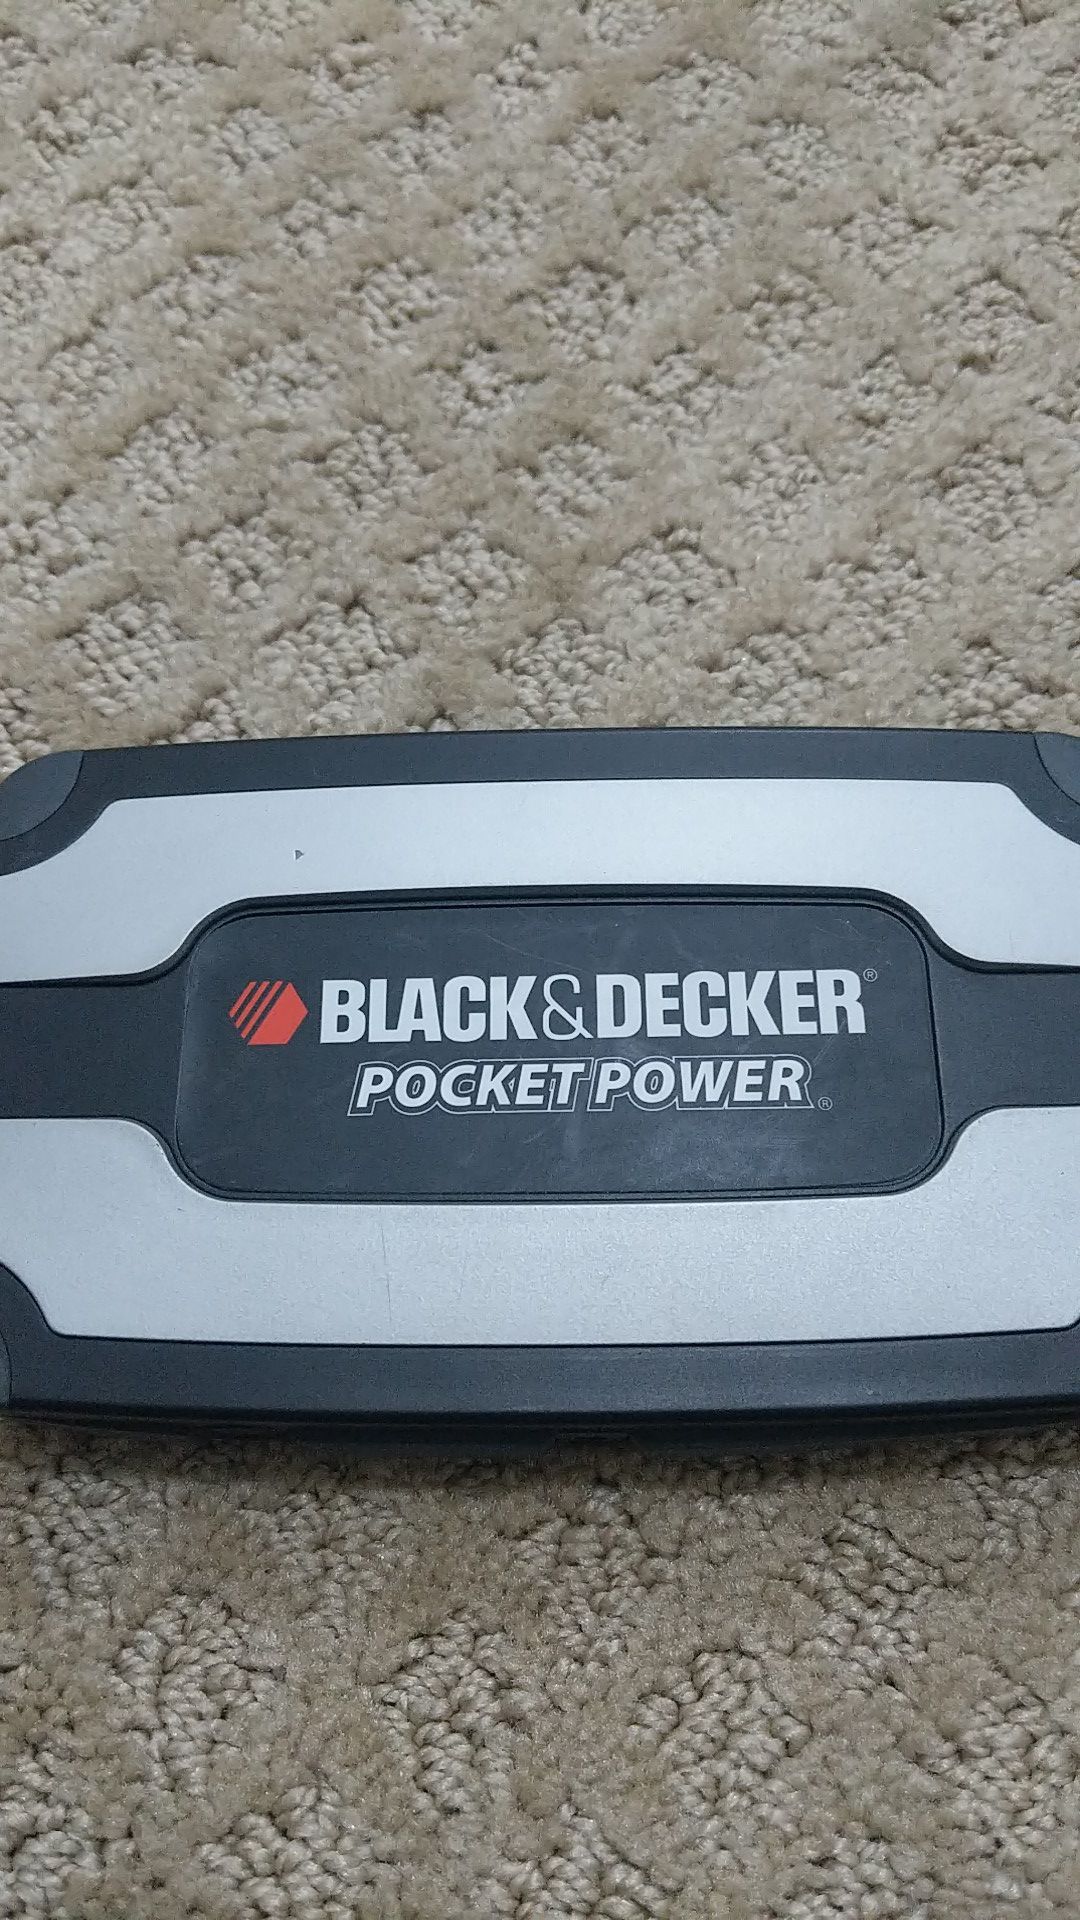 Black & Decker pocket power inverter 115 volt ac and usb